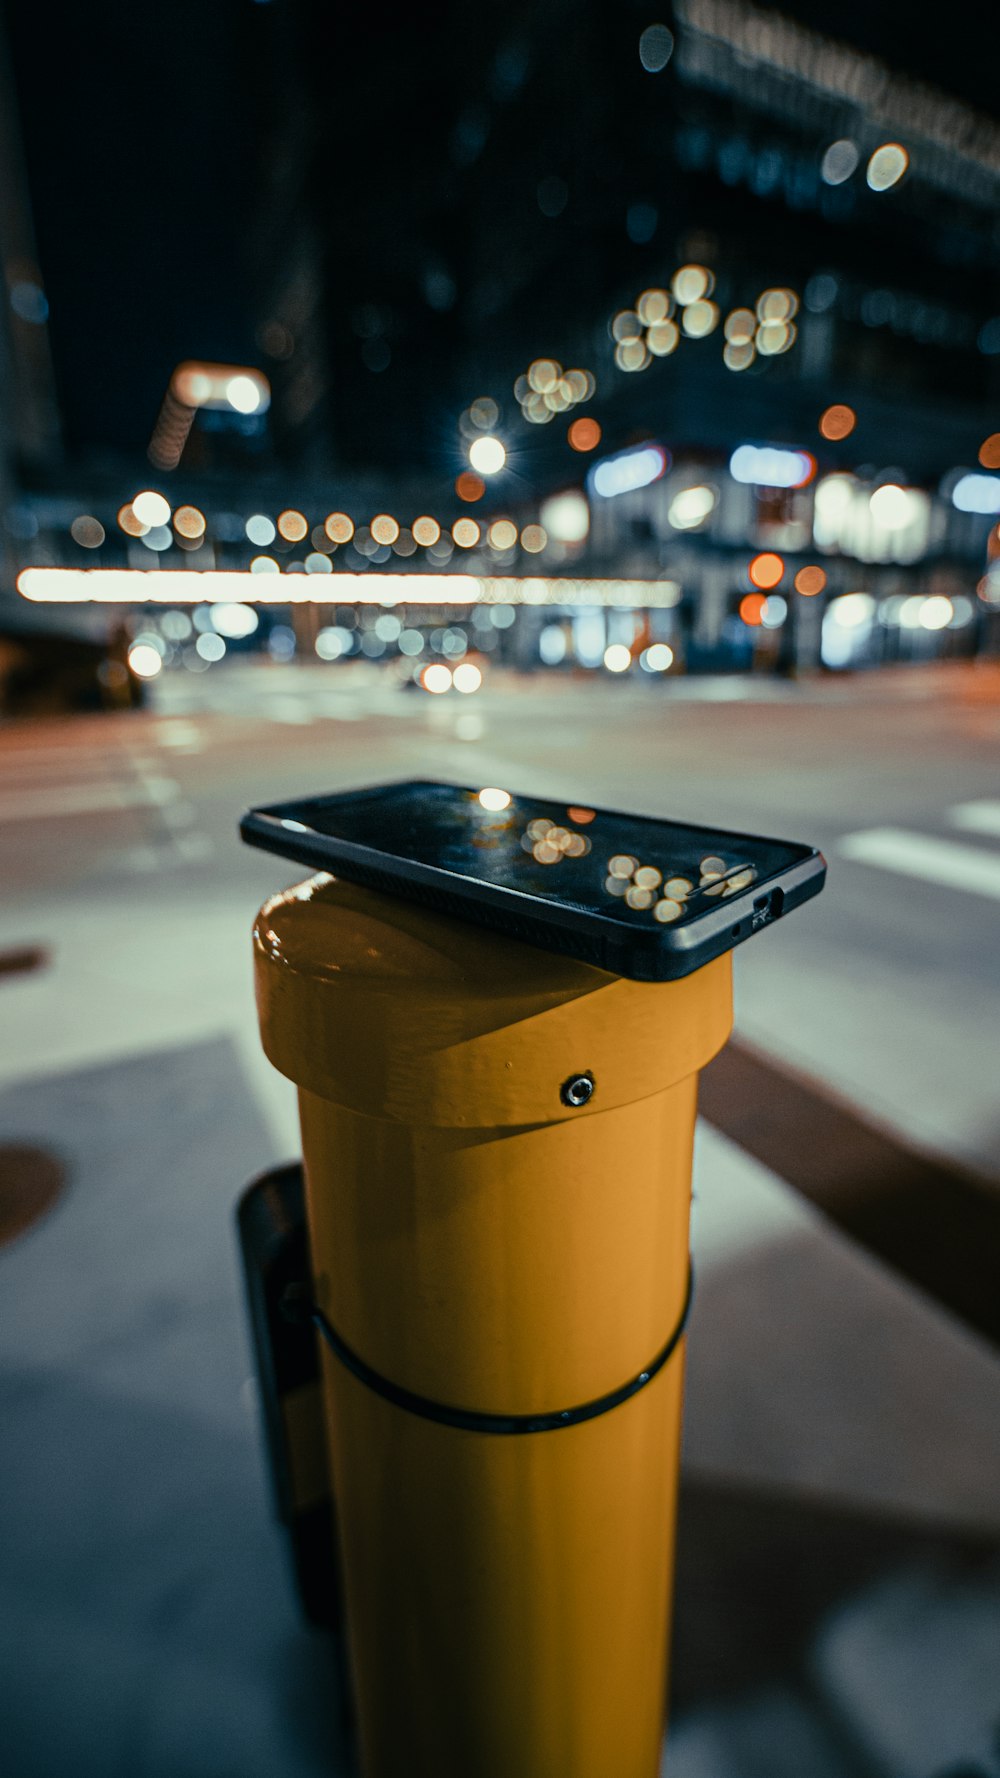 black iphone on yellow plastic trash bin